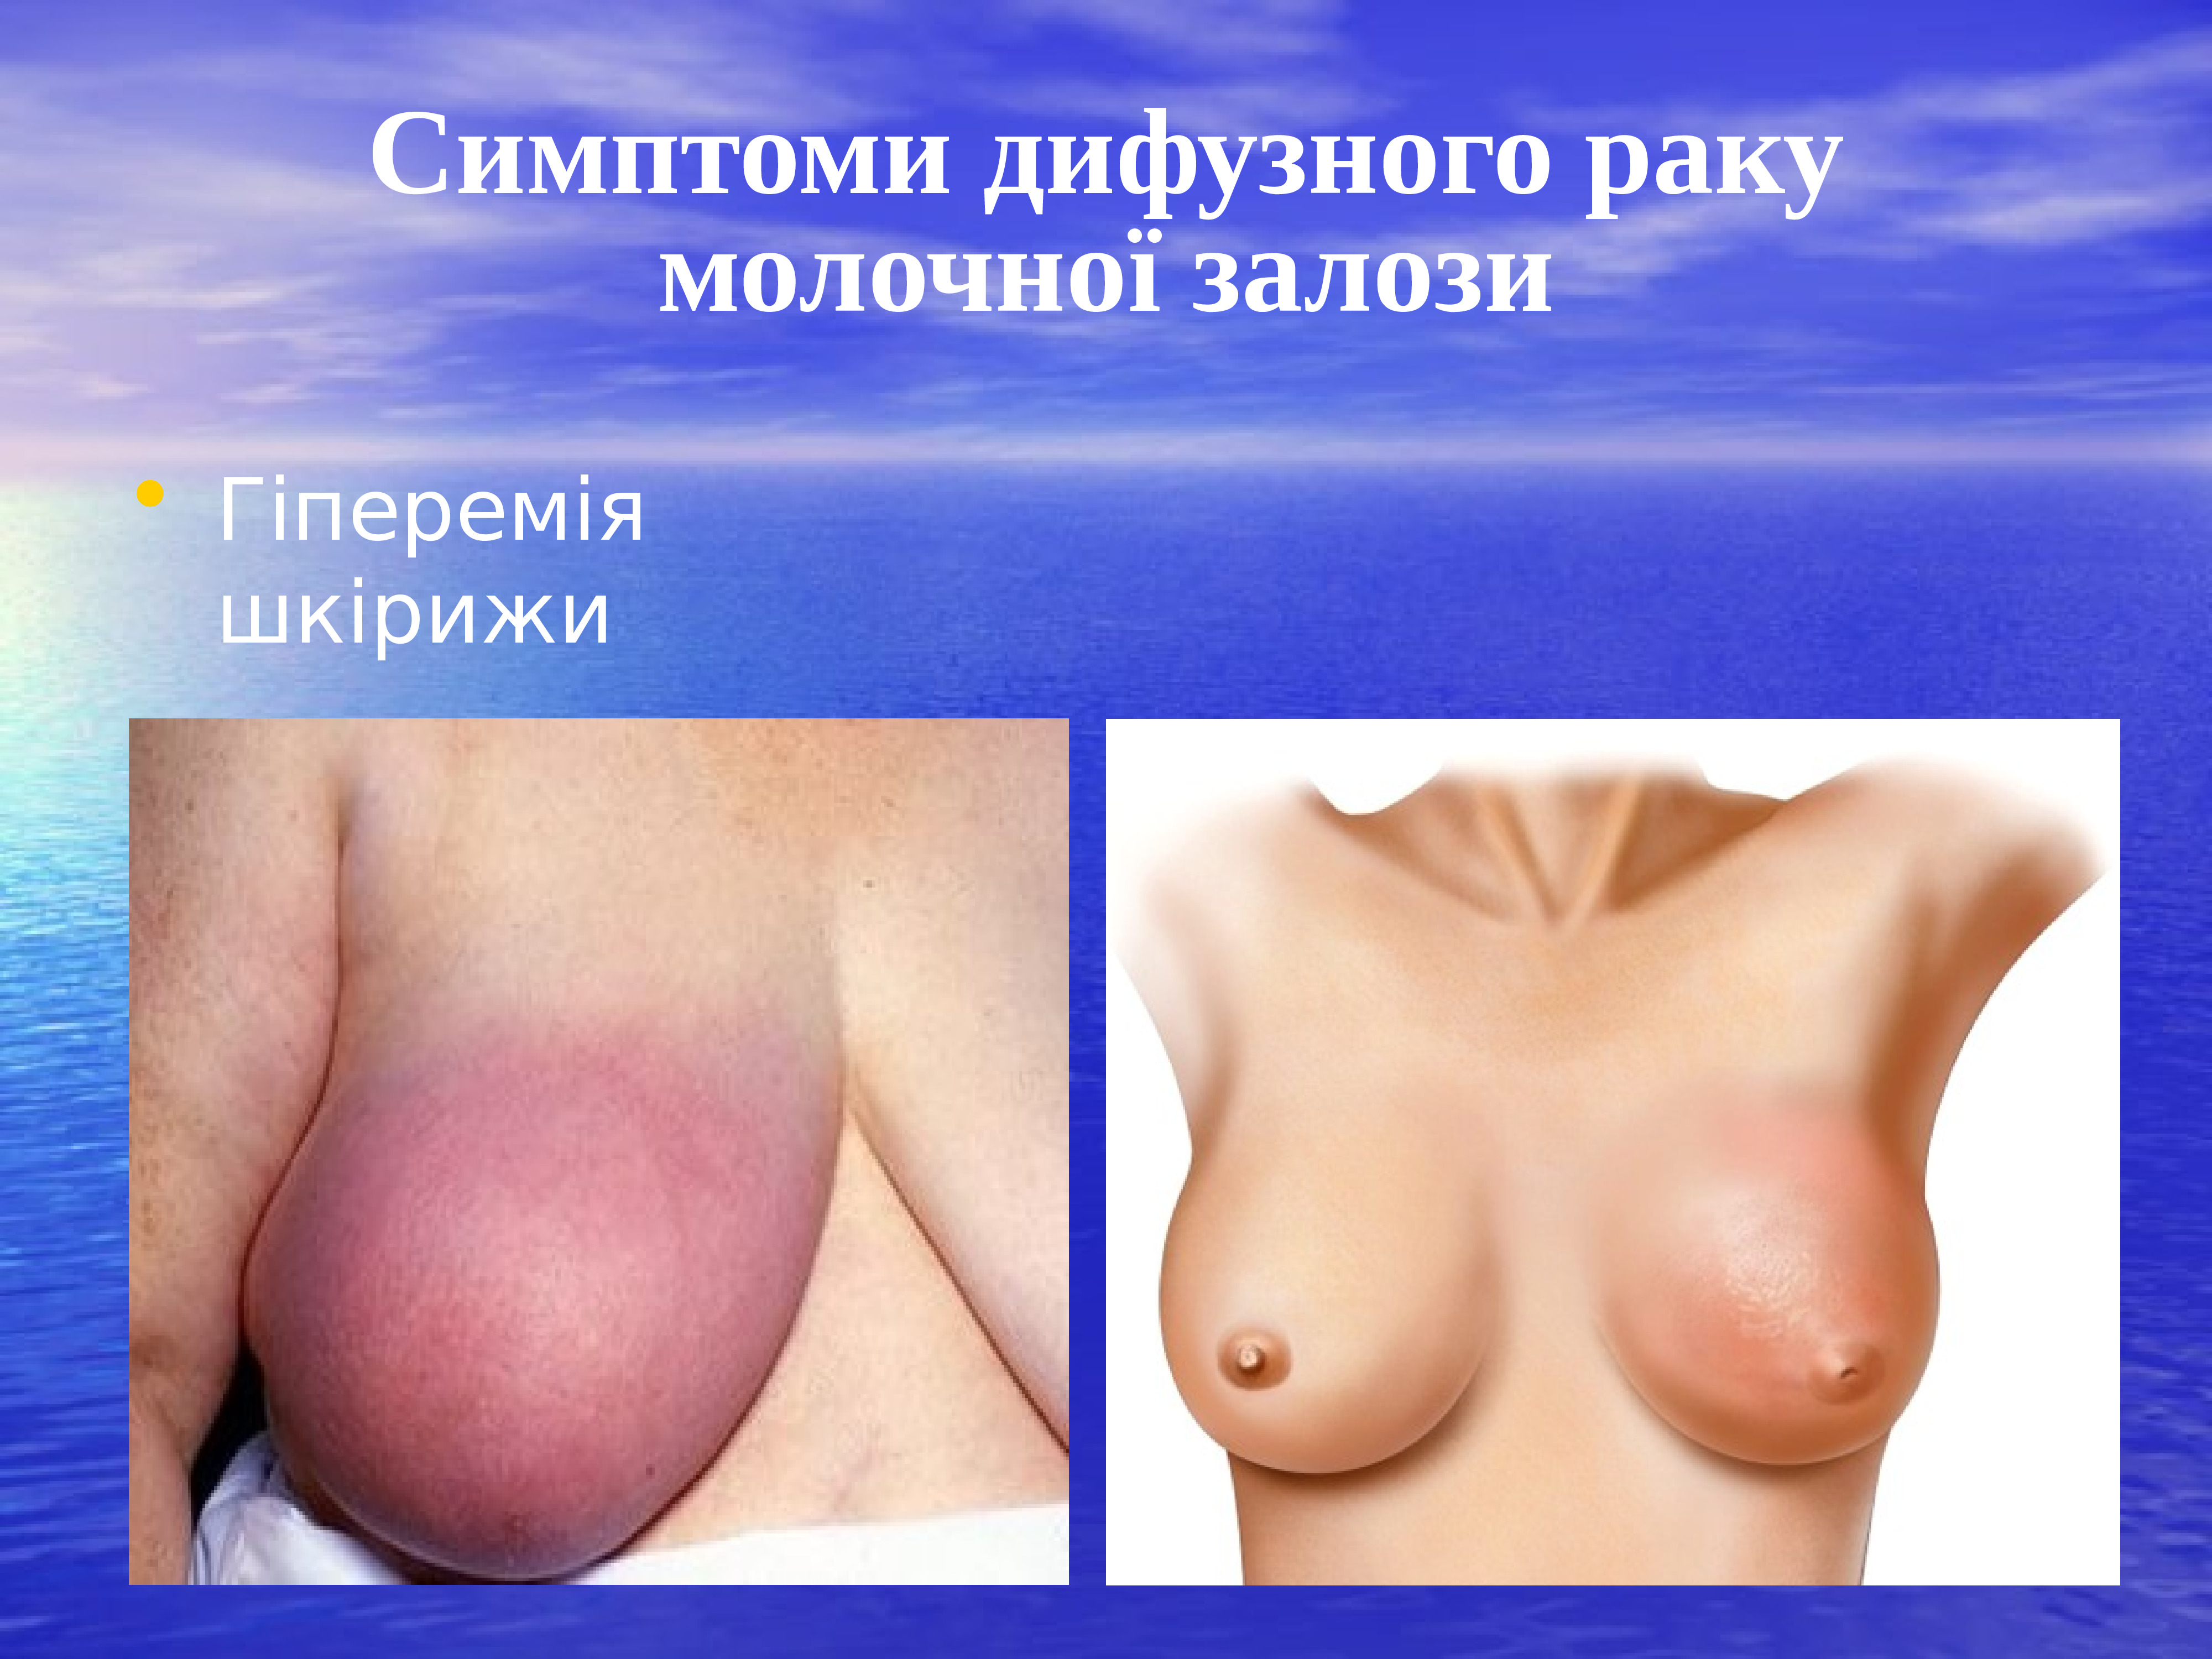 признаки рака груди у женщин первые признаки фото 56